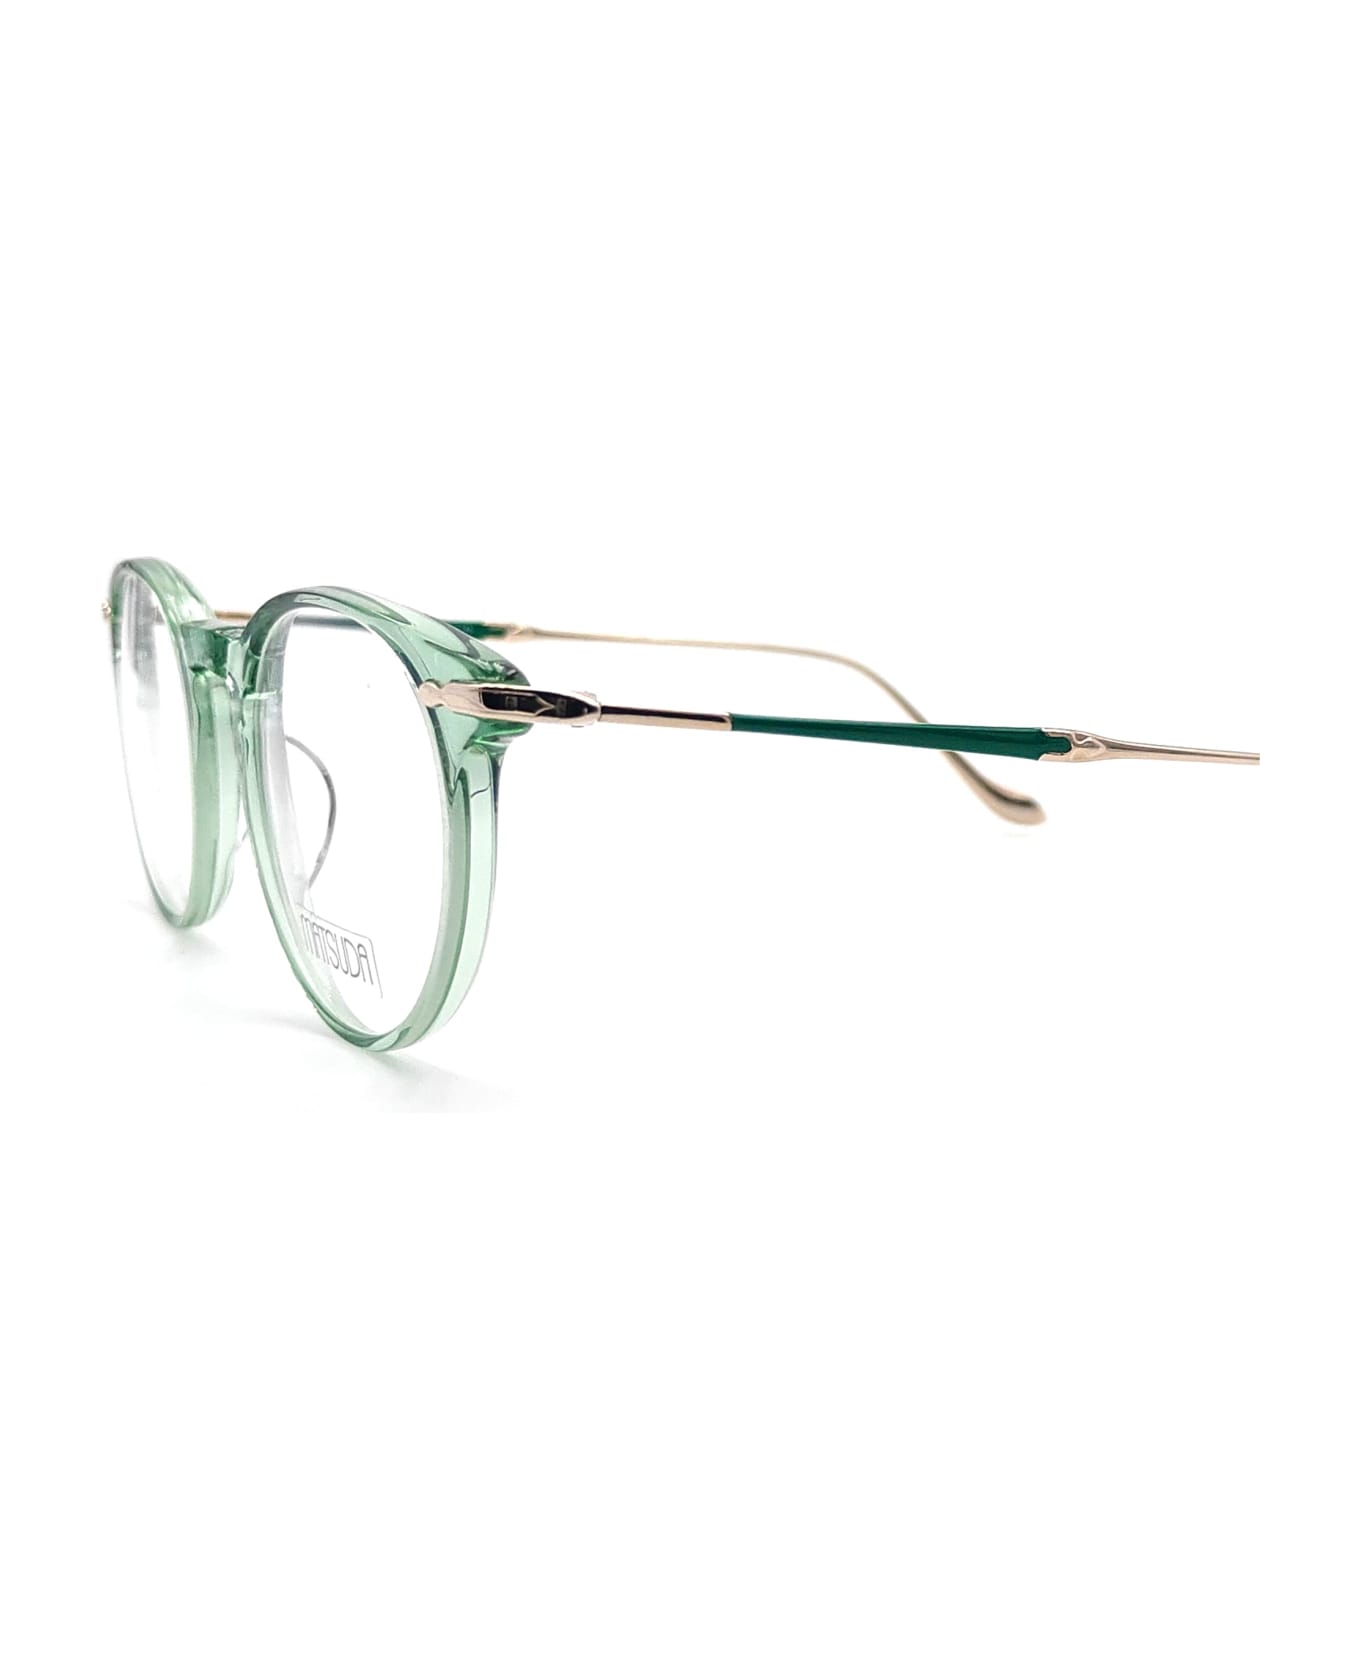 Matsuda M2056 - Mint Green - Pale Gold Rx Glasses - mint green